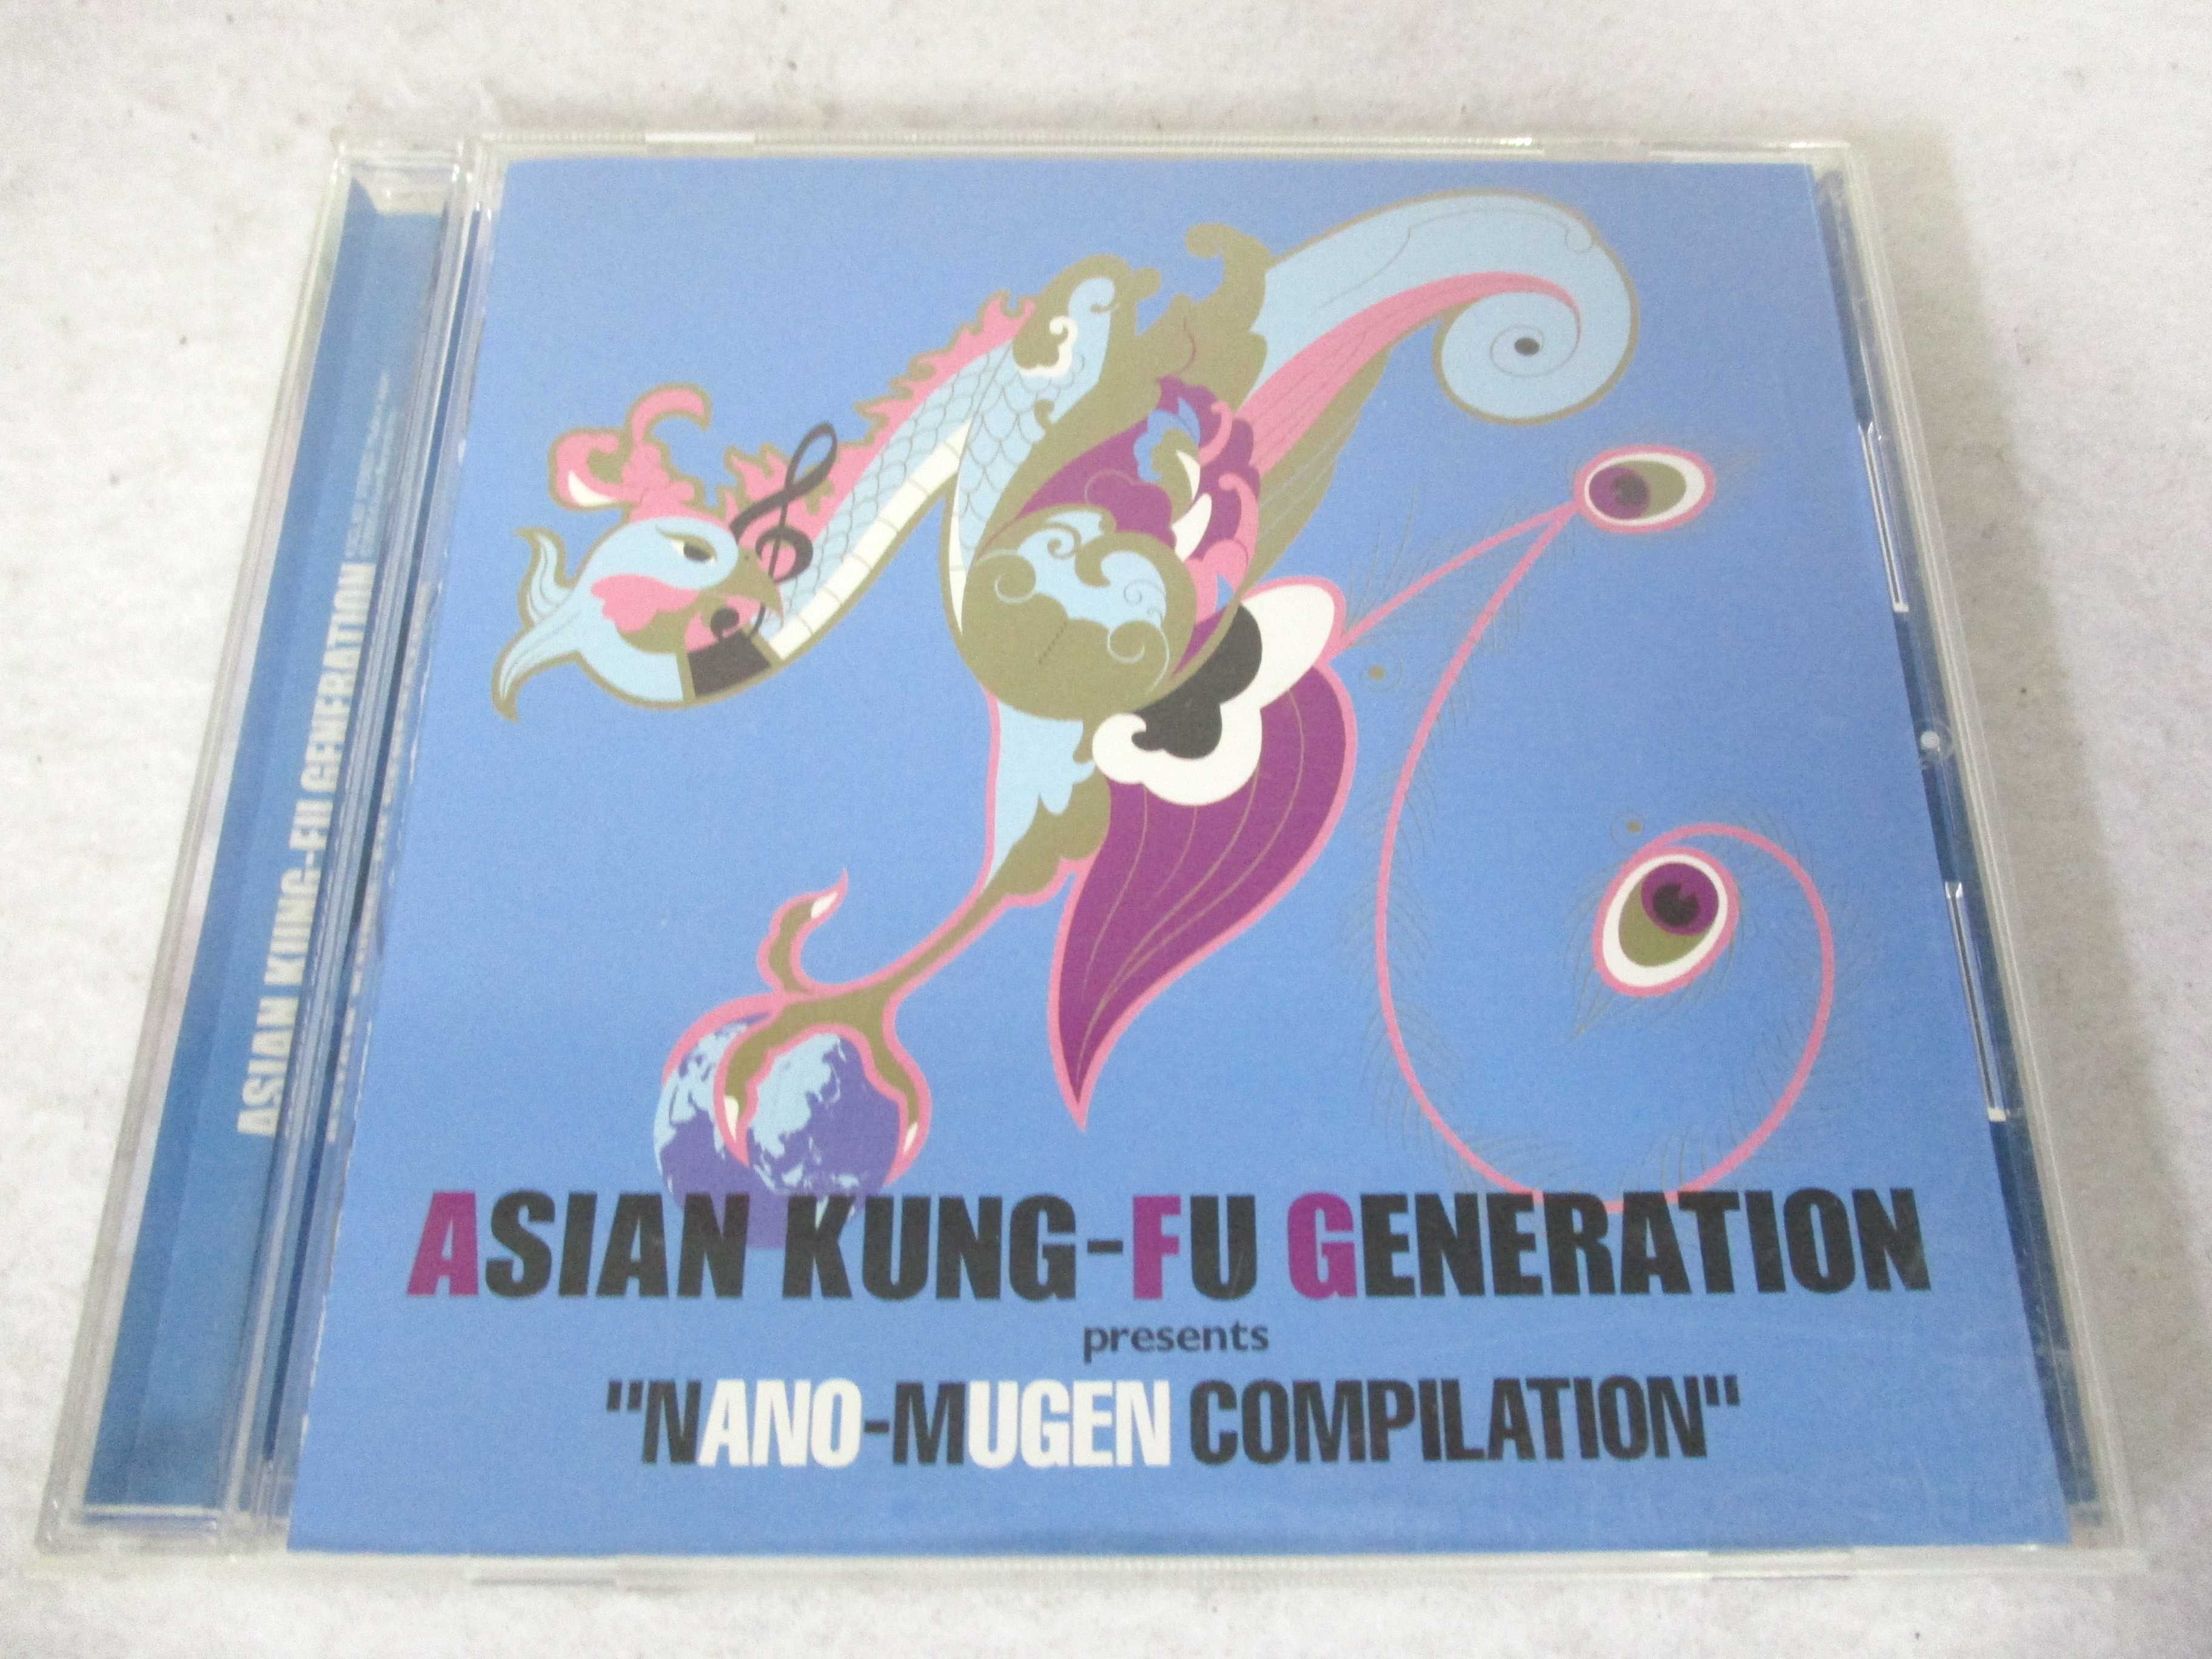 AC01849 【中古】 【CD】 Asian Kung-Fu Generation presents Nano-Mugen Compilation/ASH 他